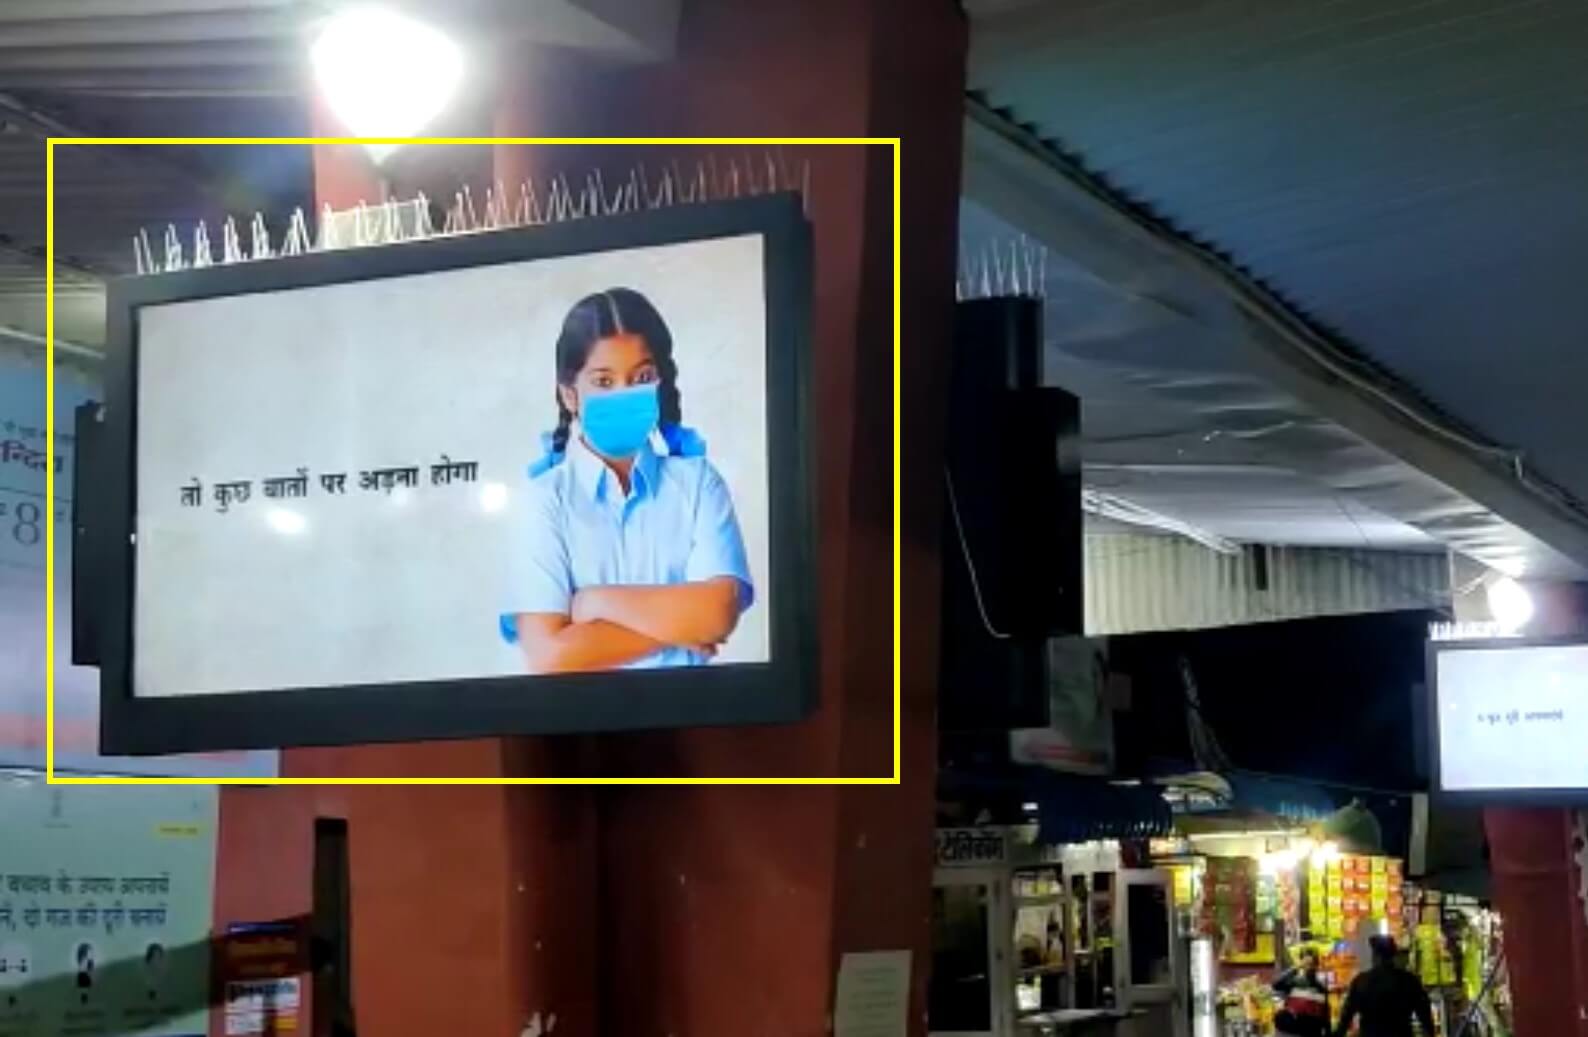 LED Screen Advertising at Kota Bus Stand, Rajasthan